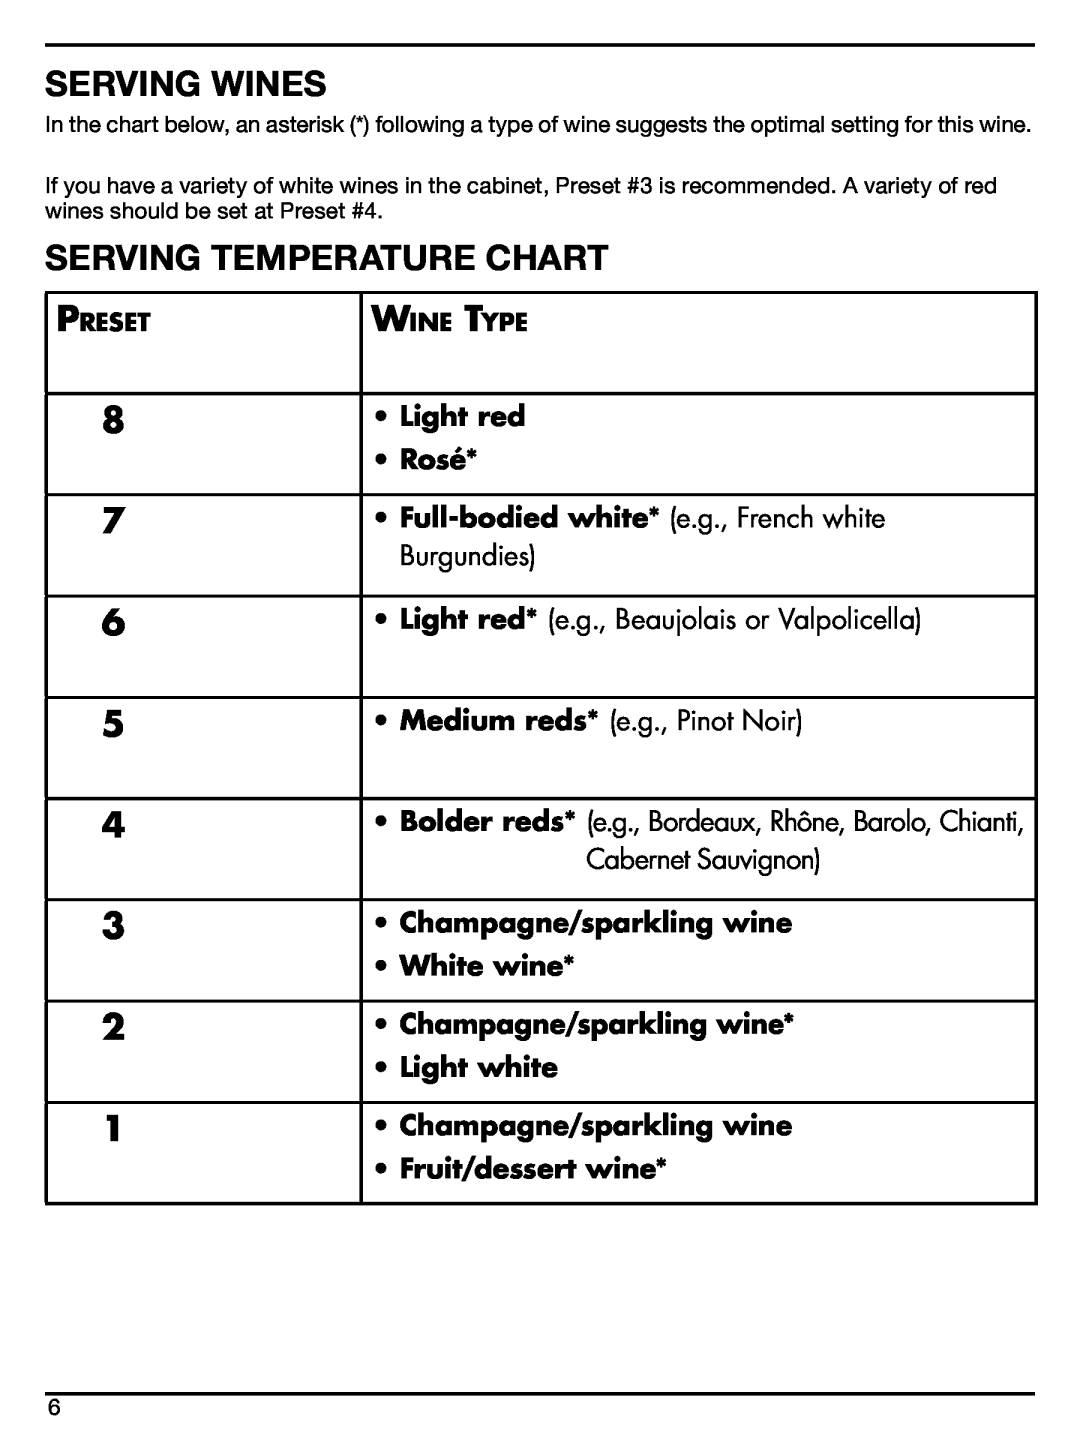 Cuisinart CWC-600 manual Serving Wines, Serving Temperature Chart, Bolder reds* e.g., Bordeaux, Rhône, Barolo, Chianti 